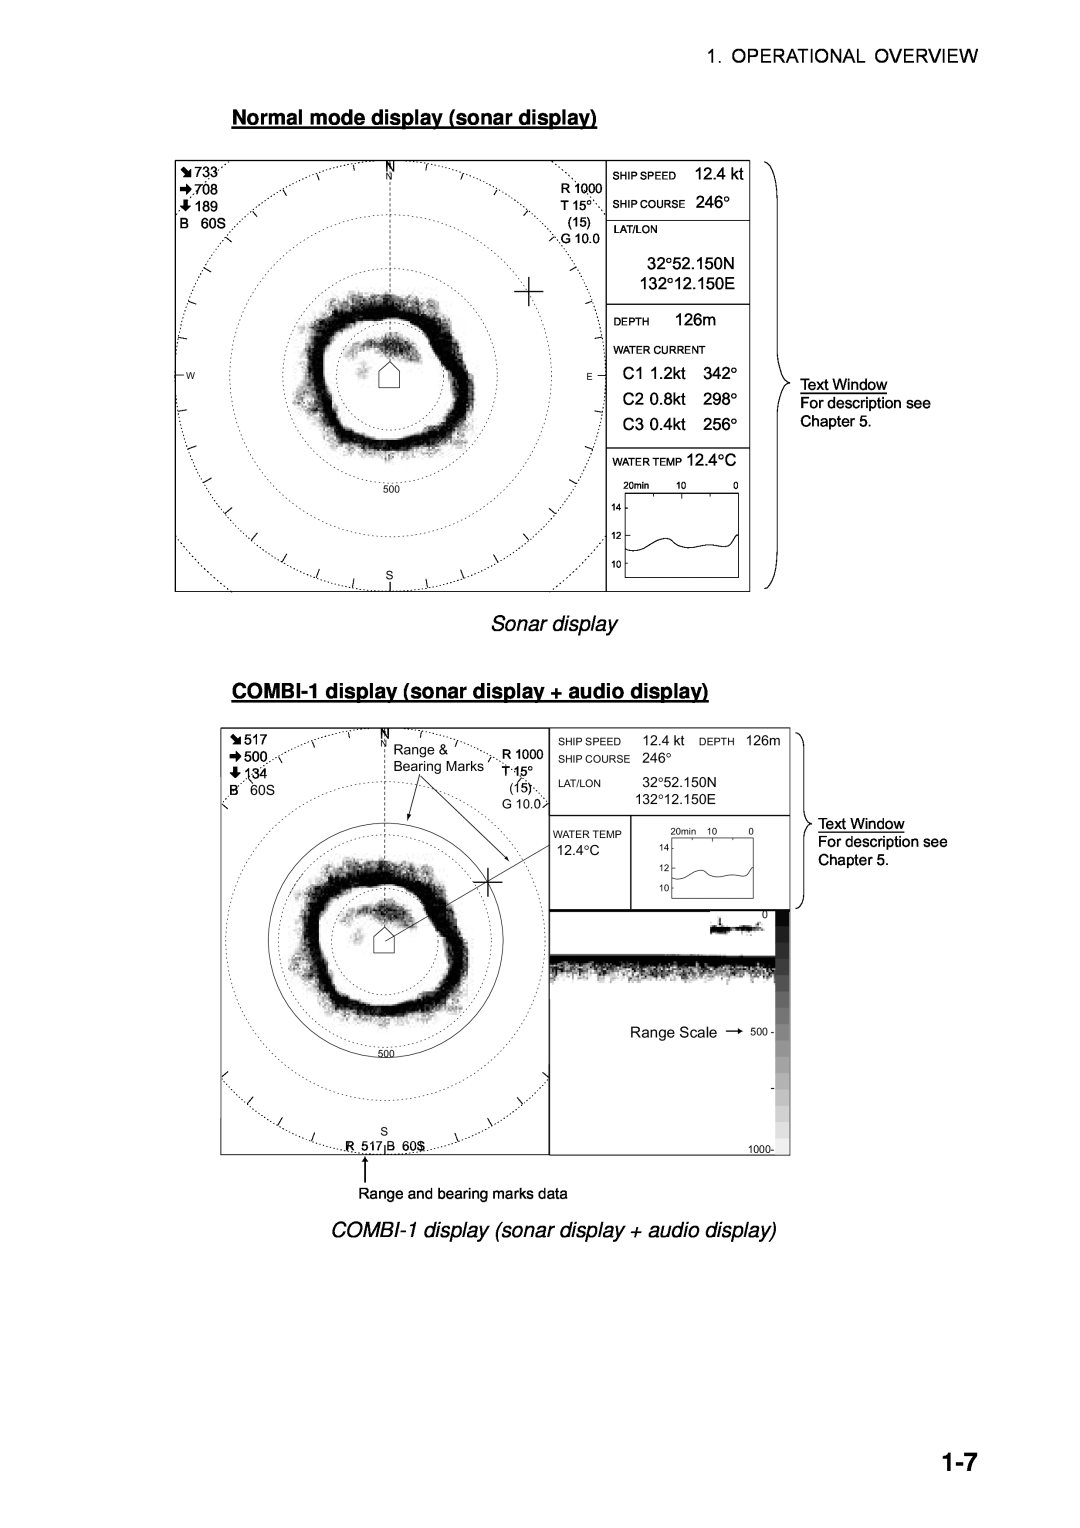 Furuno CSH-5L/CSH-8L Sonar display, COMBI-1 display sonar display + audio display, Text Window For description see Chapter 